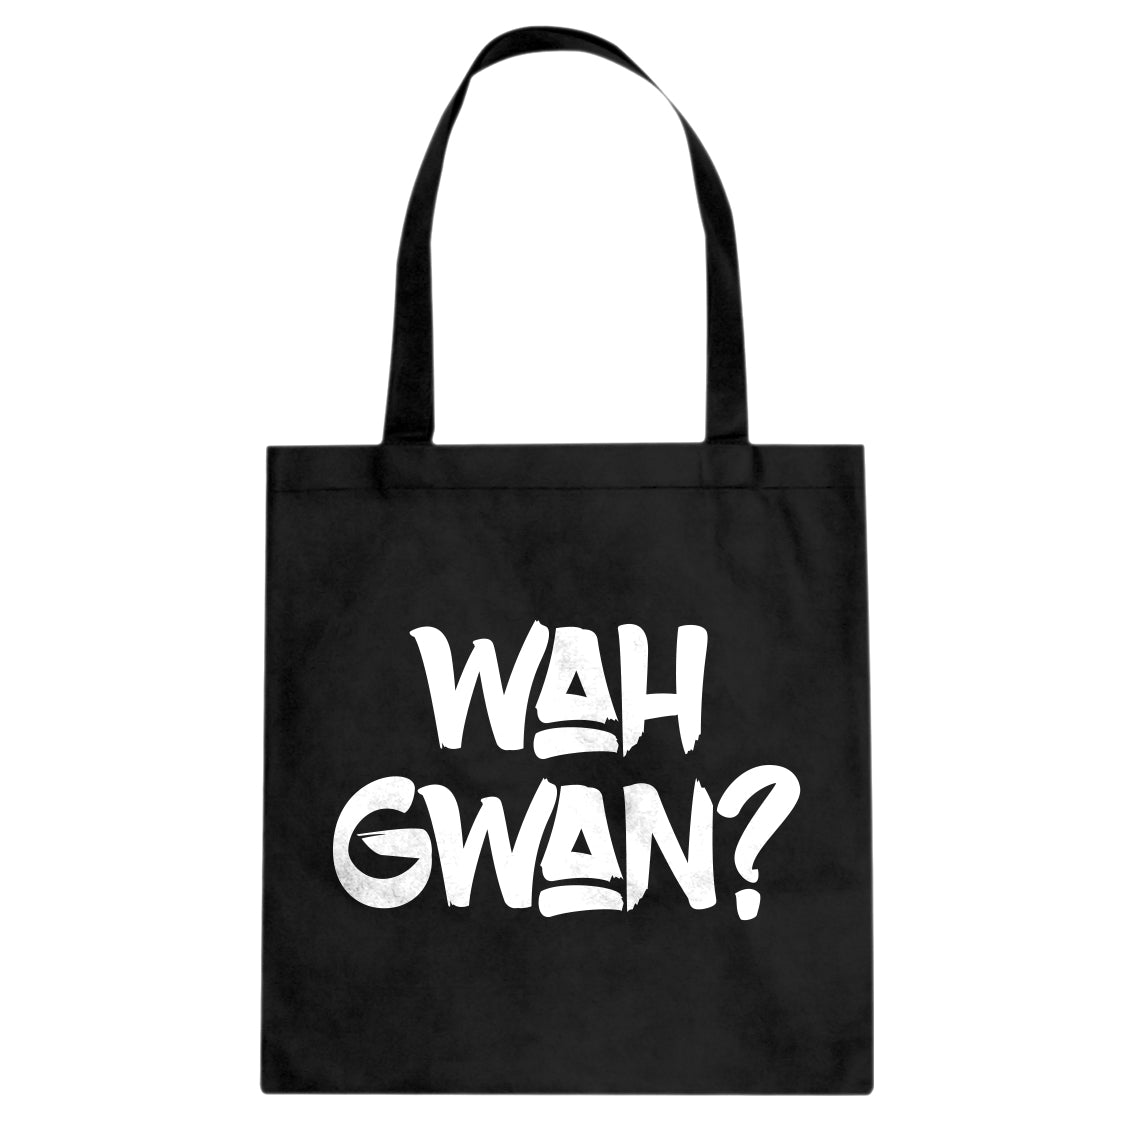 Wah Gwan? Cotton Canvas Tote Bag